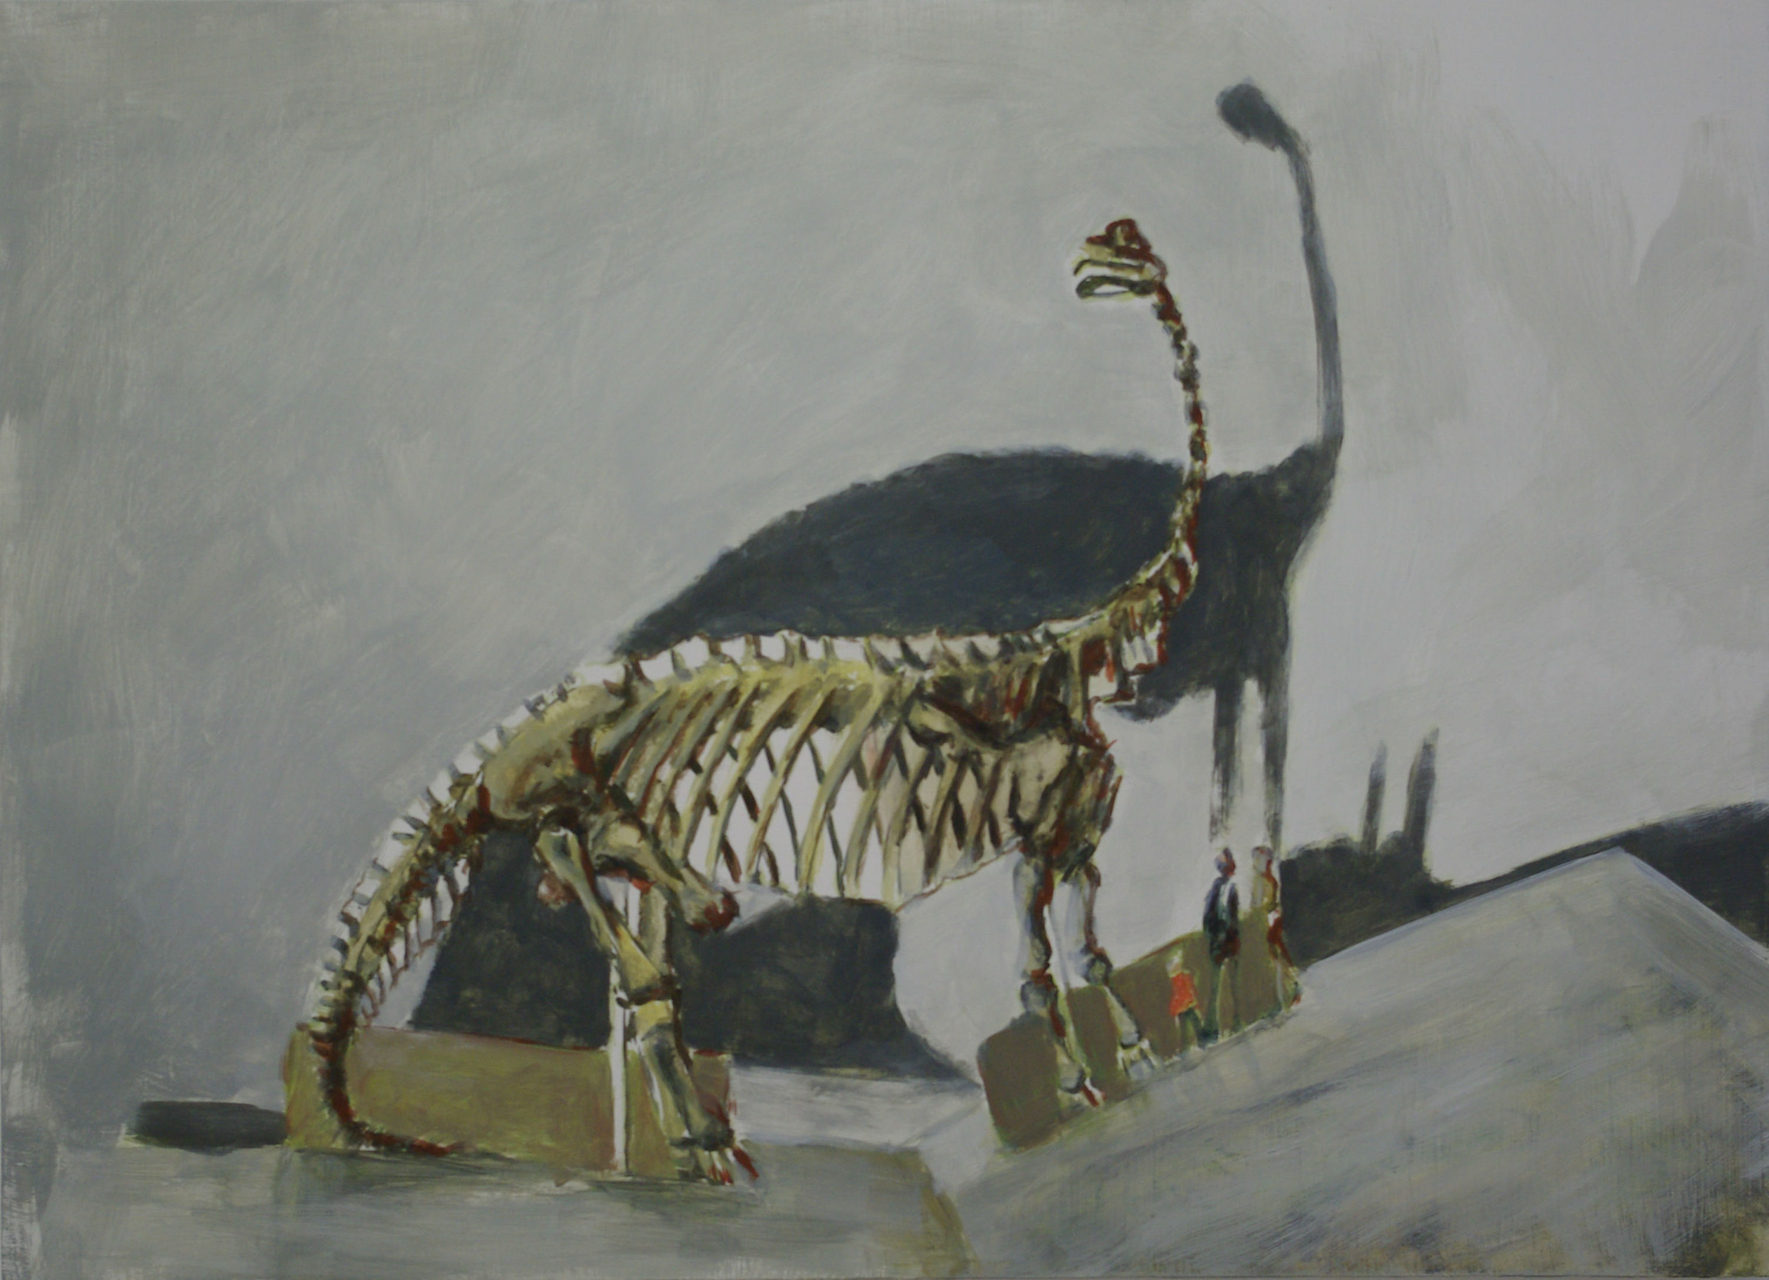 the paleontologist